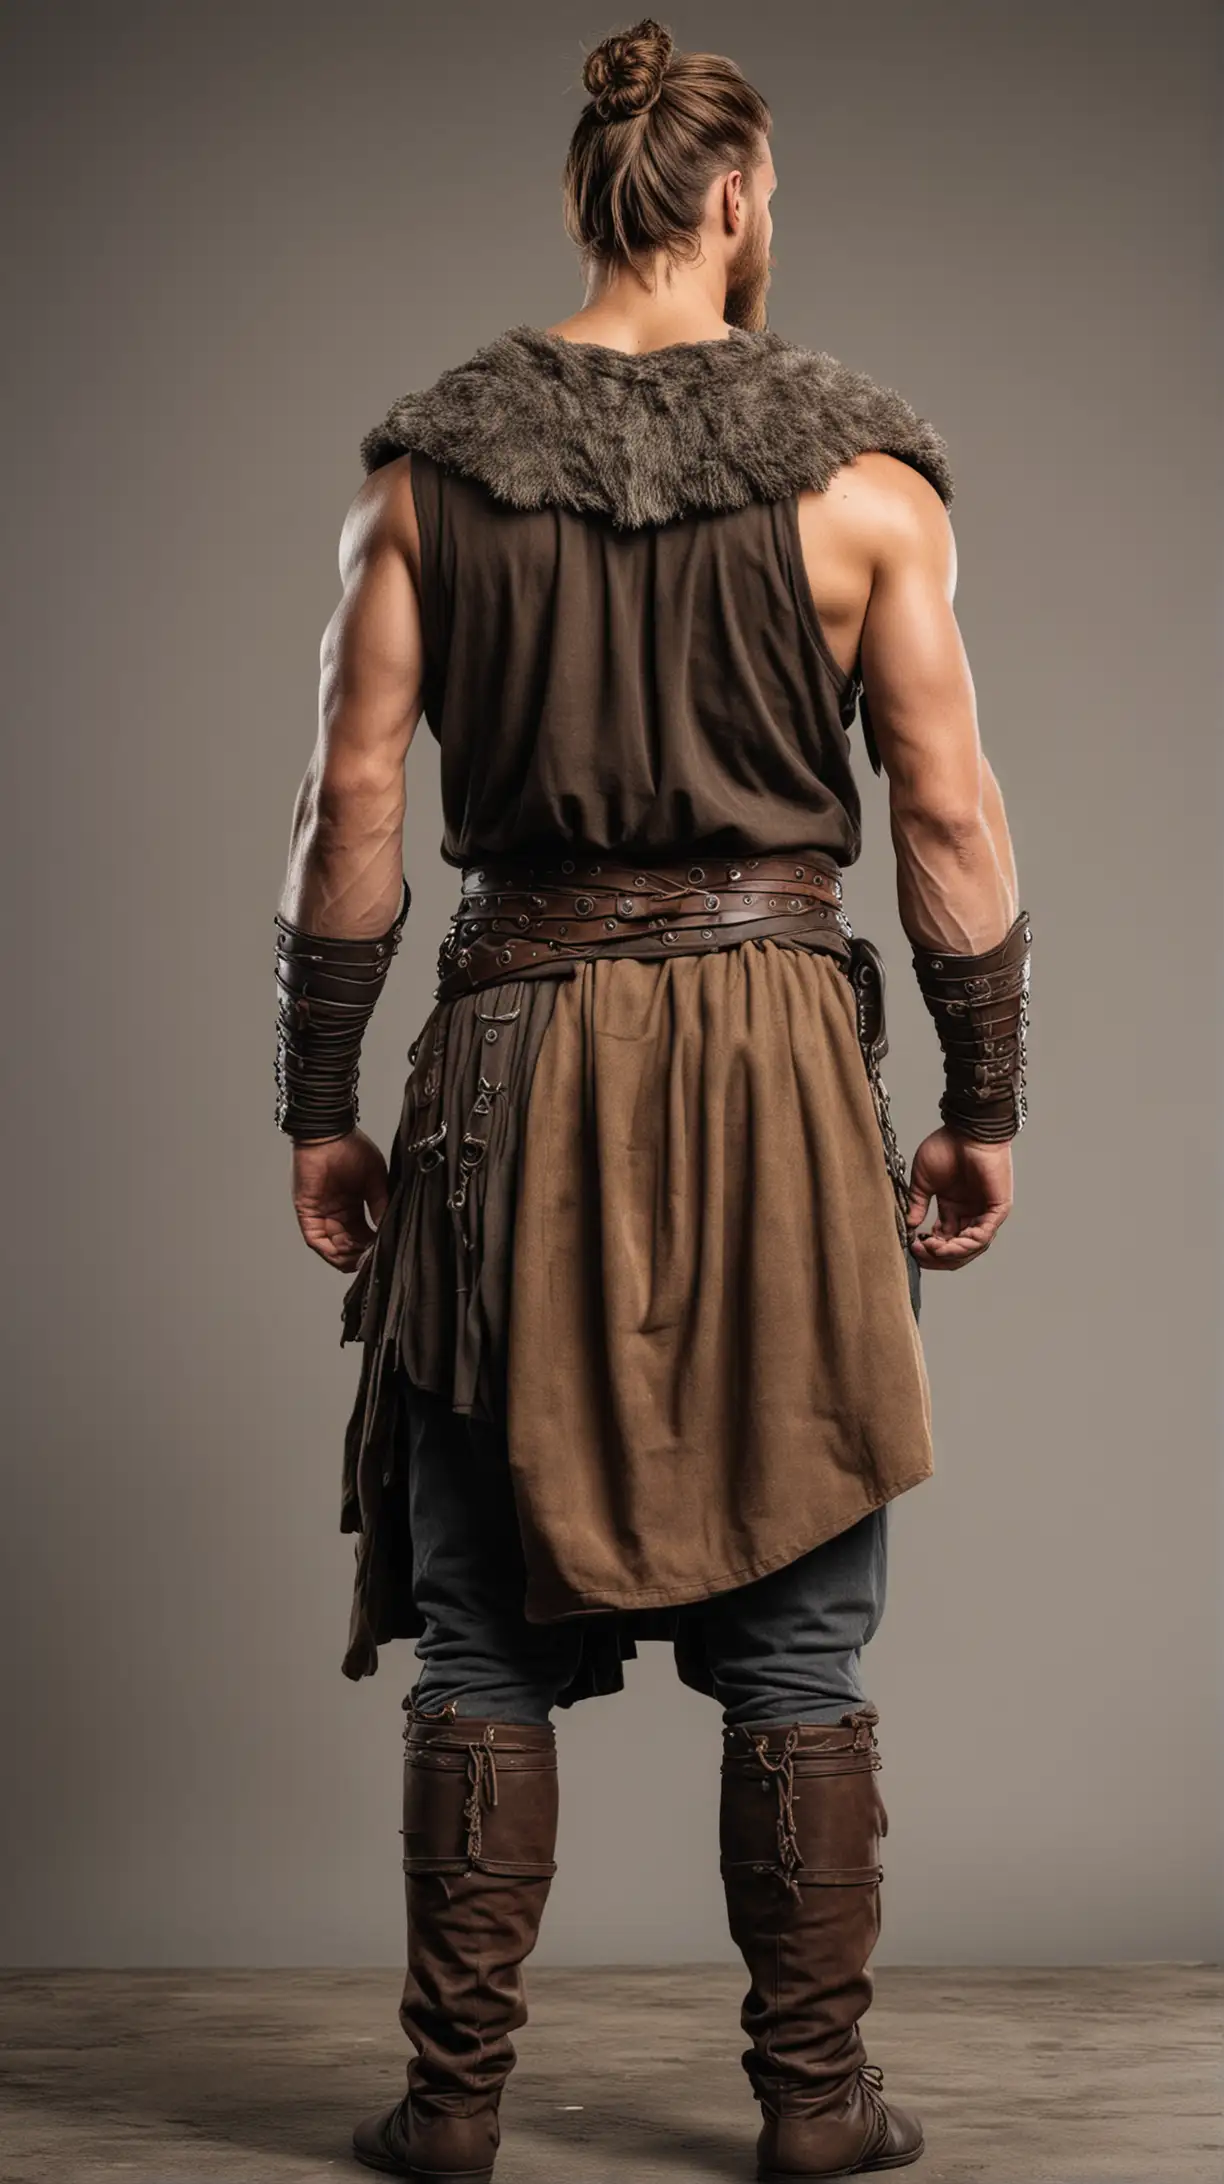 Muscular Viking Warrior Standing Strong in Warrior Attire